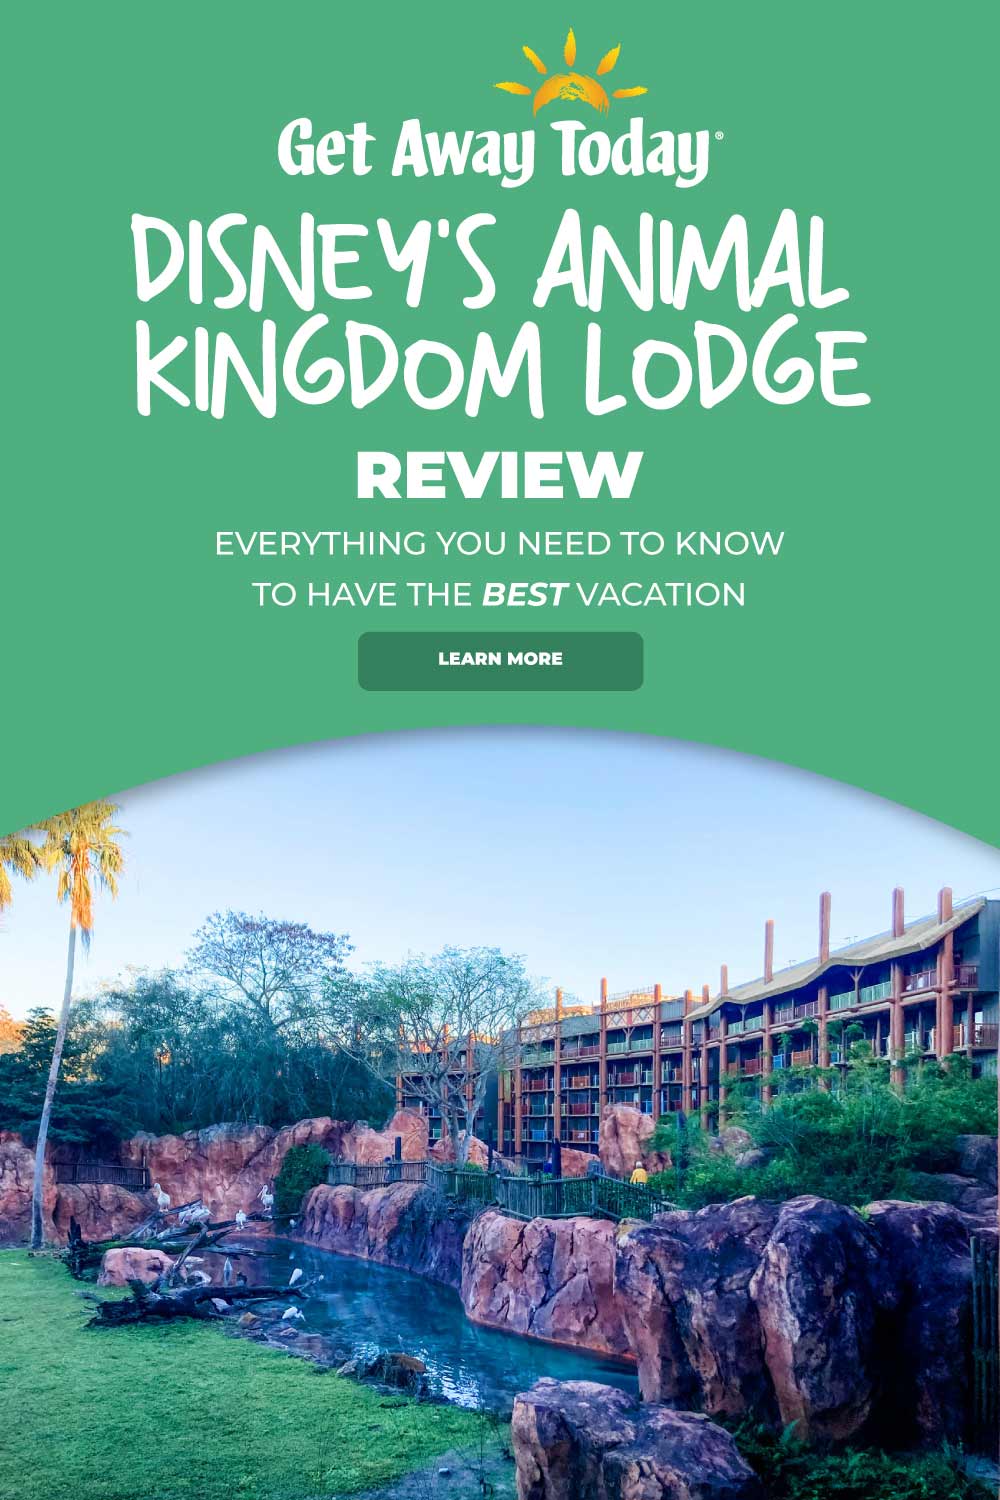 Disney's Animal Kingdom Lodge Review || Get Away Today